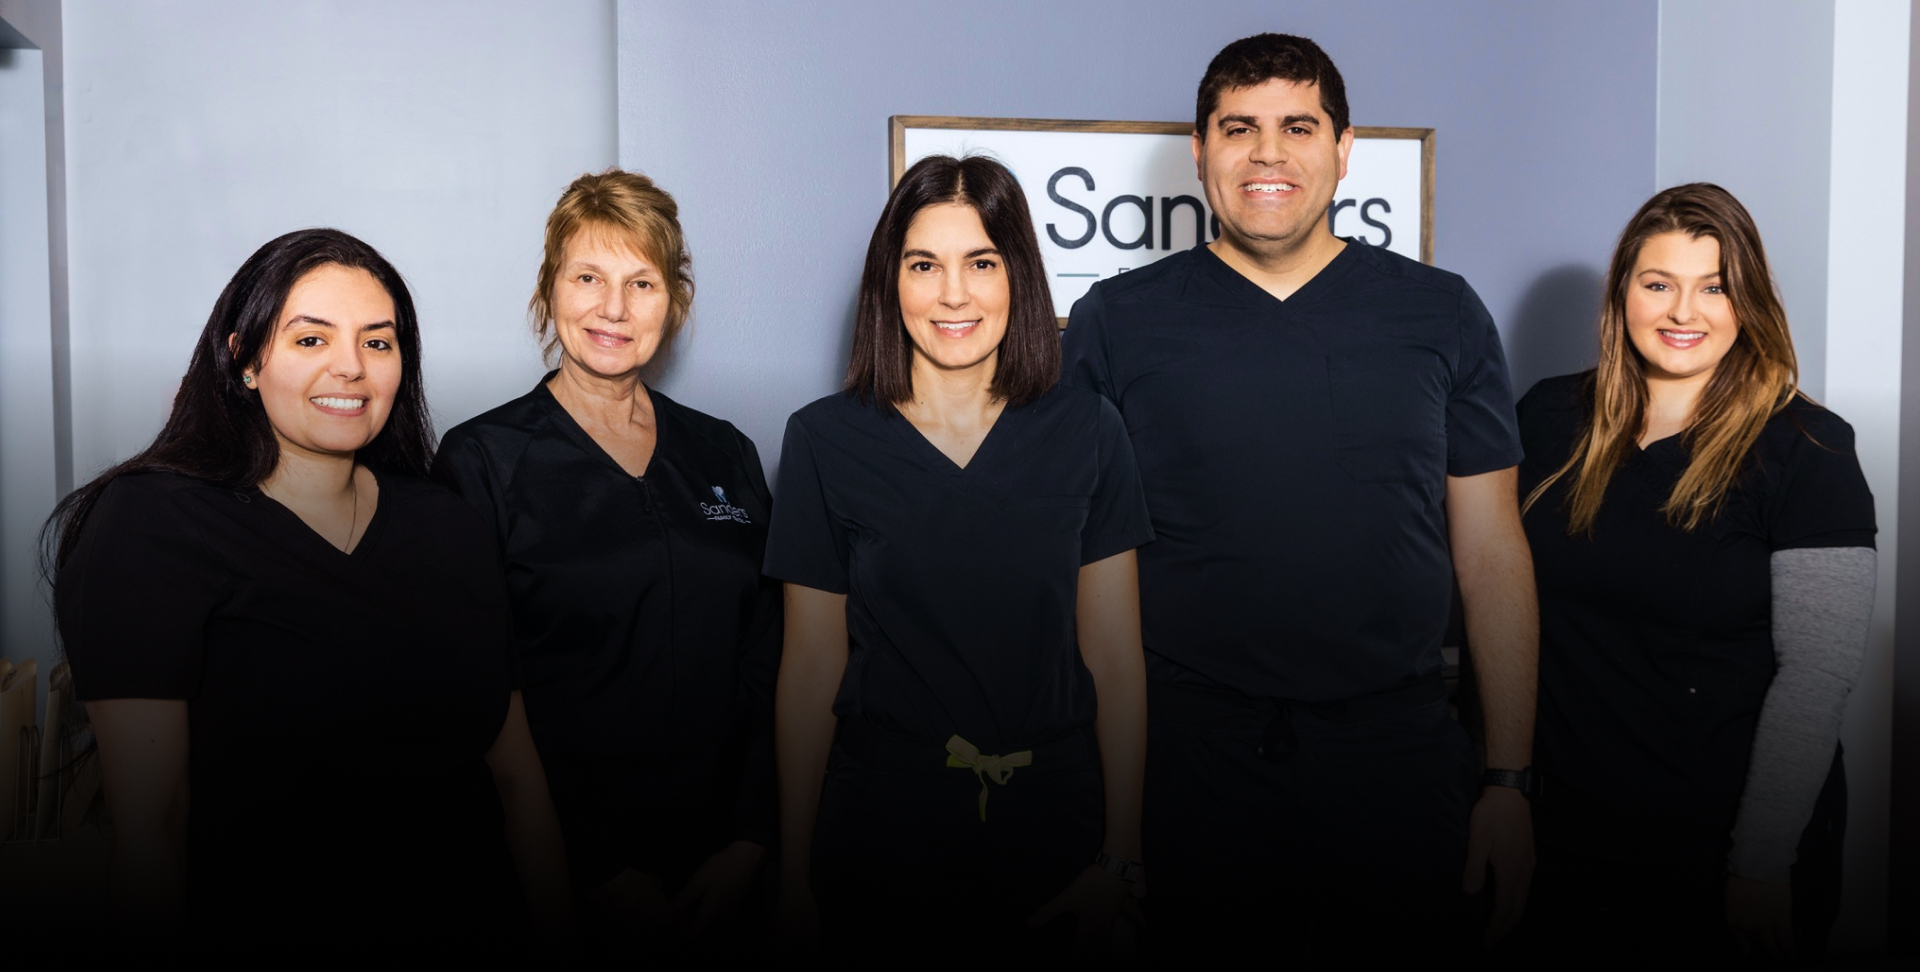 sanders family dental dentist lombard team members